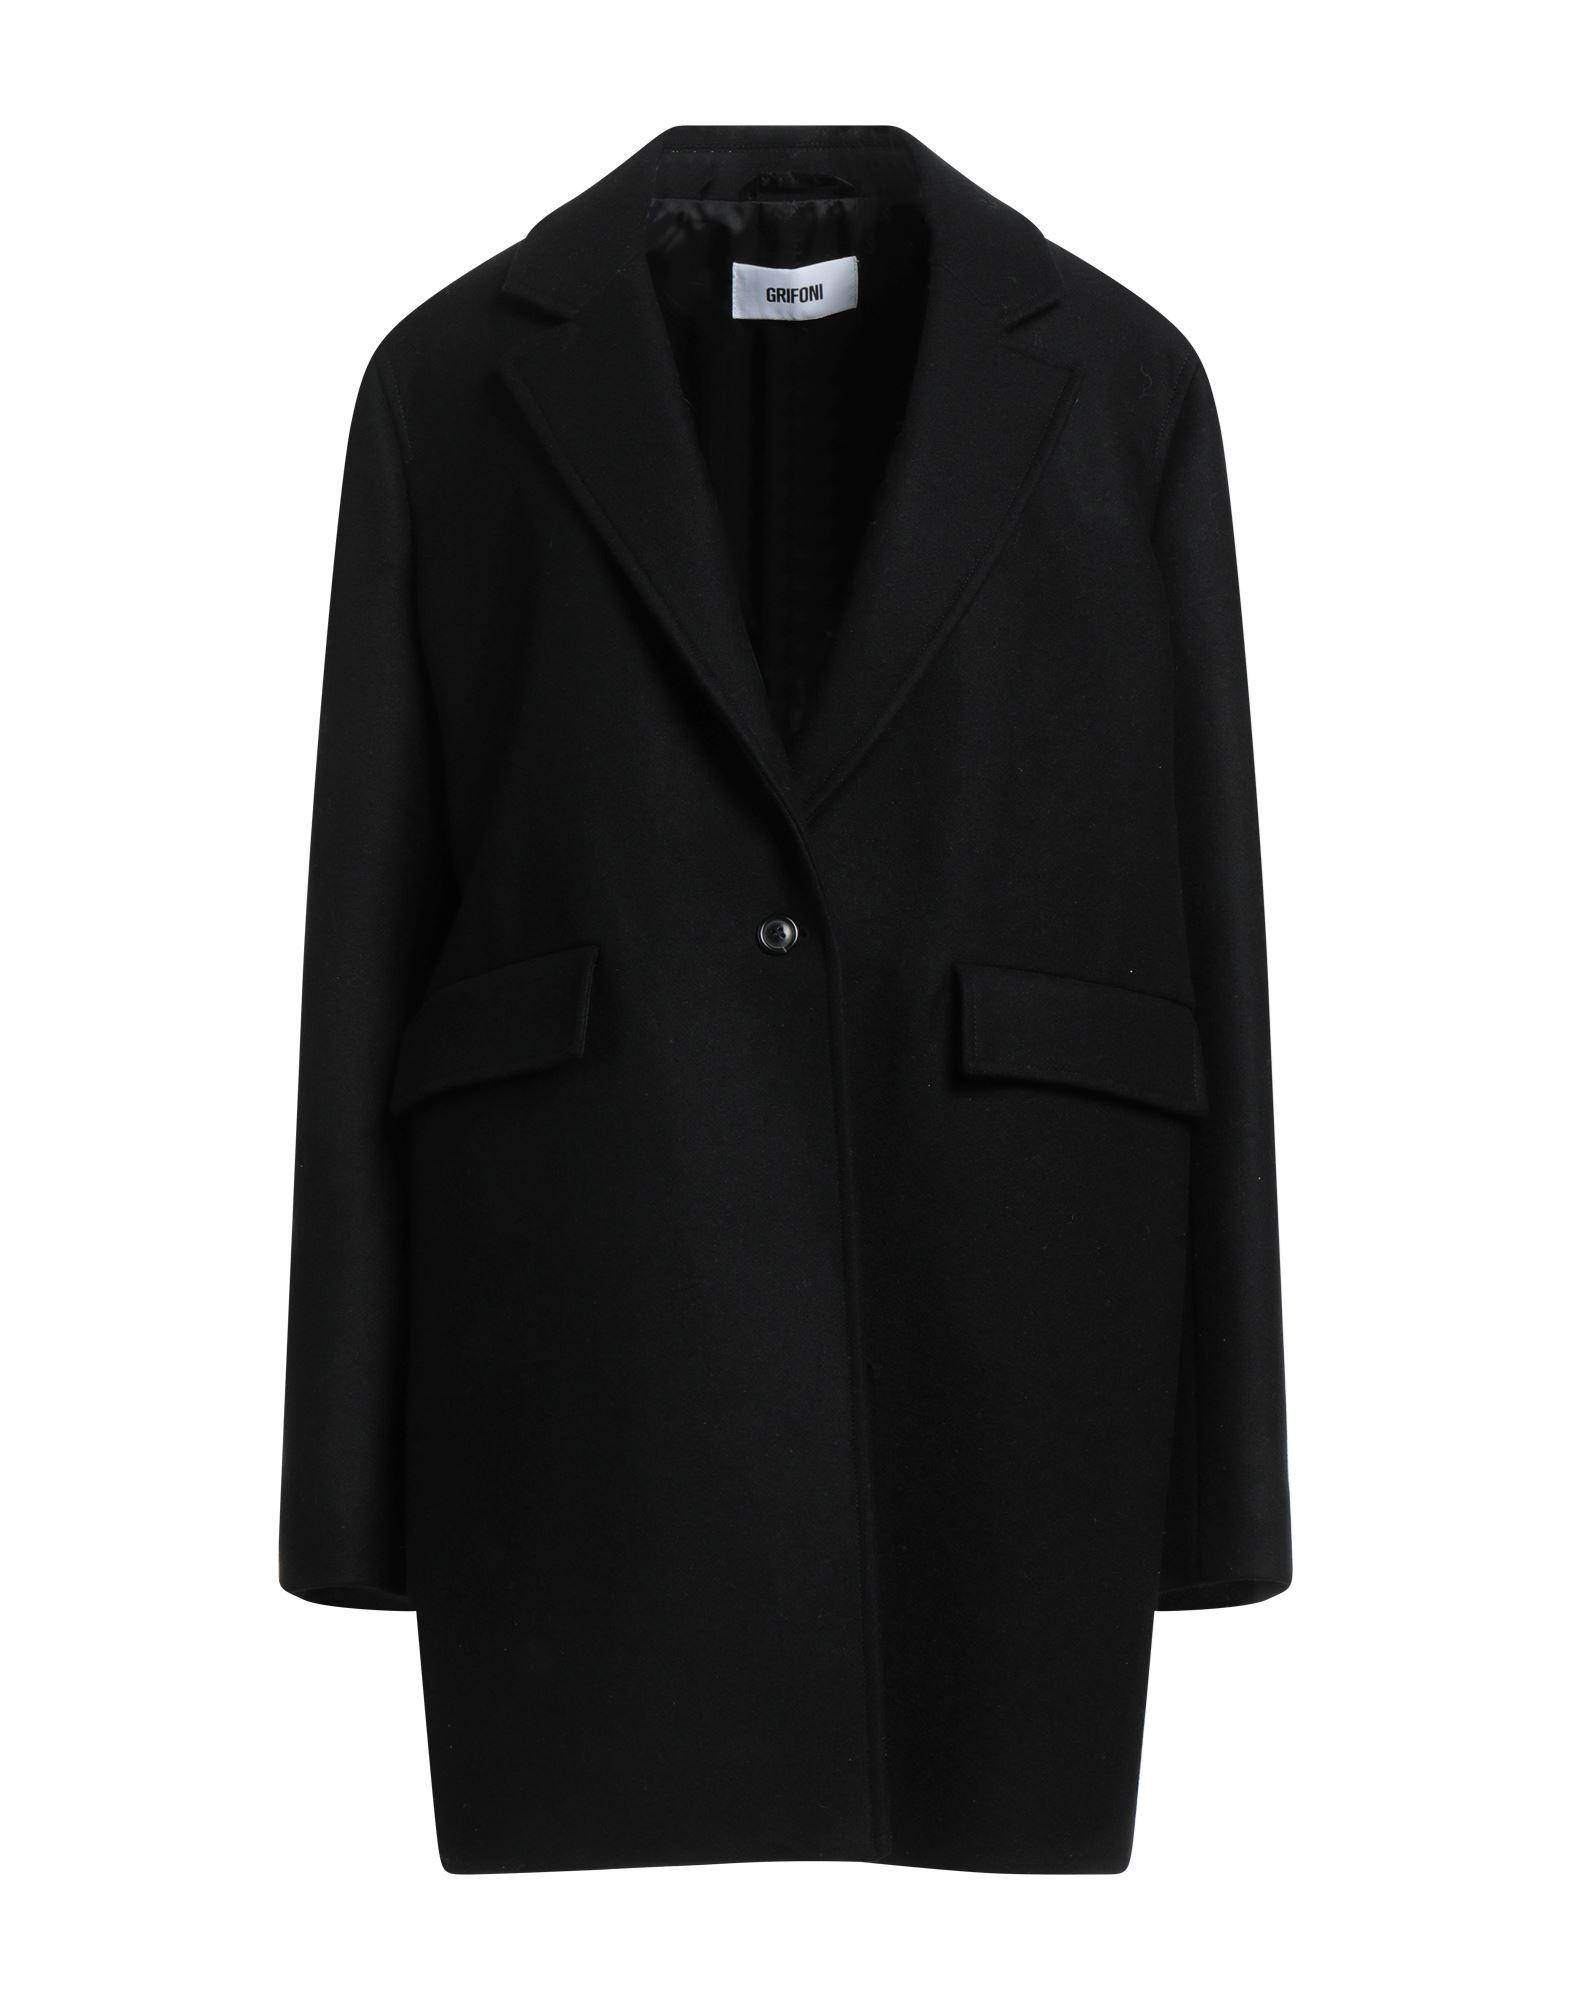 Mauro Grifoni Coat in Black | Lyst